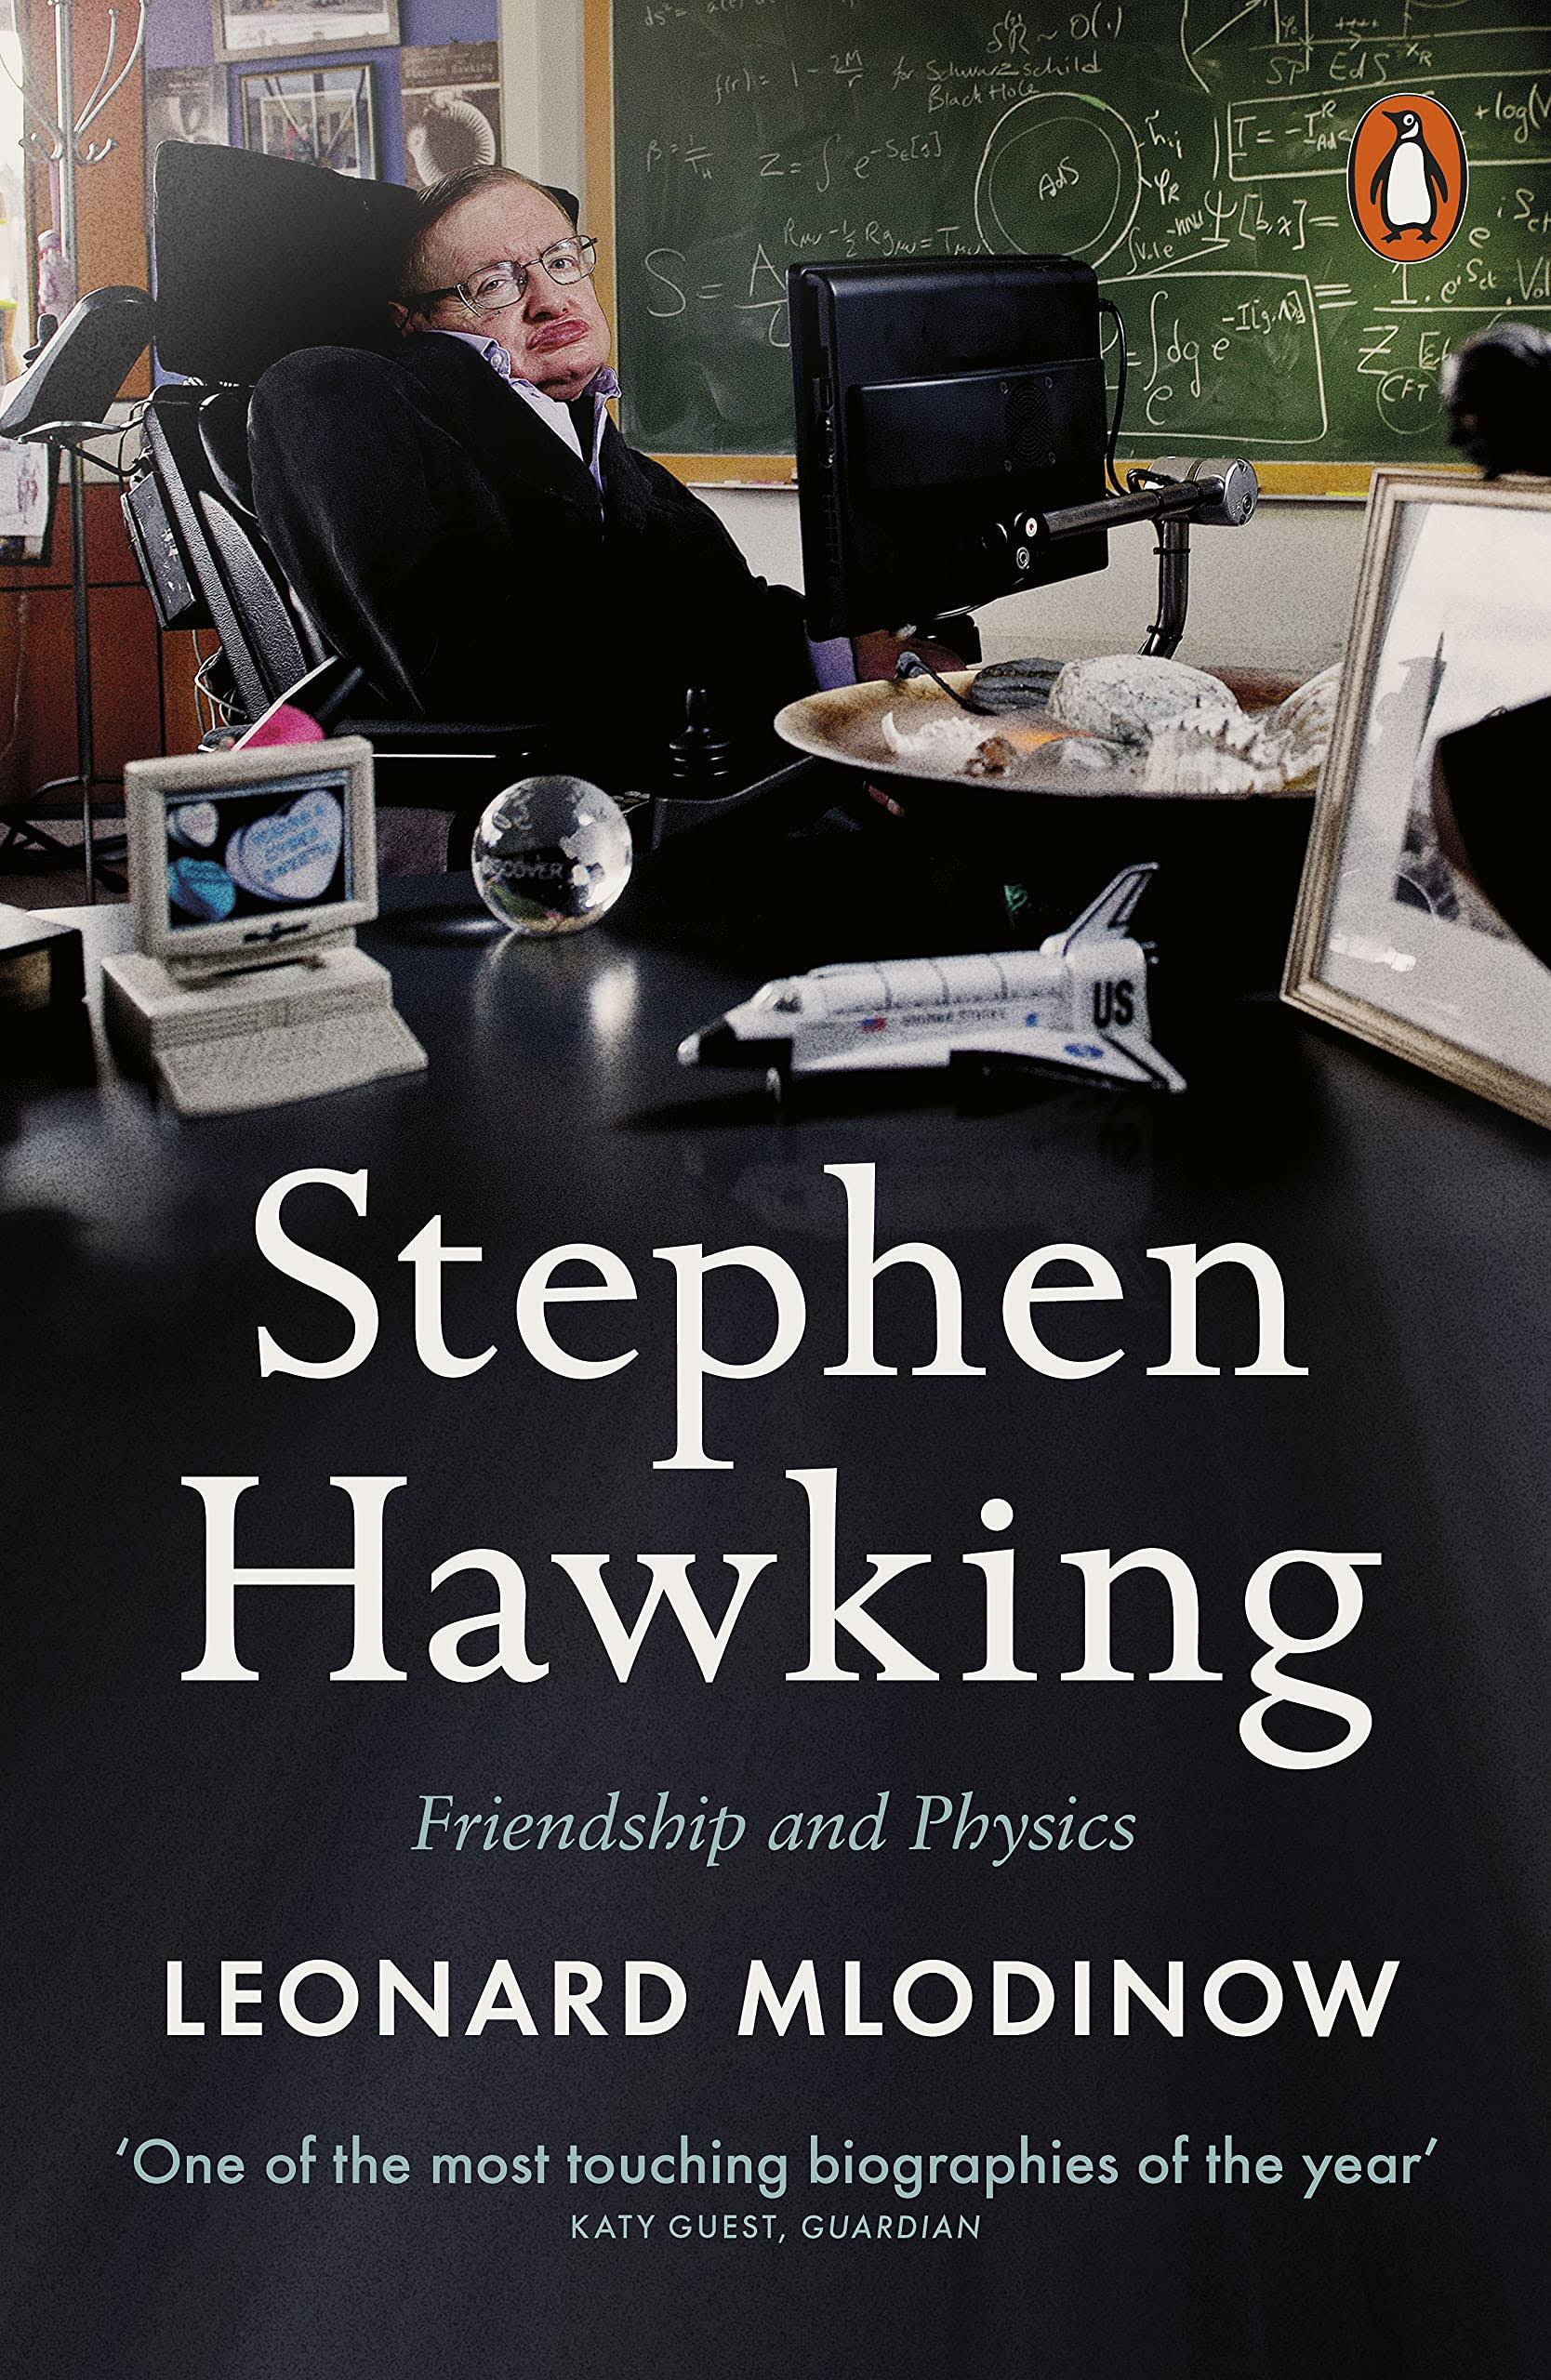 Stephen Hawking: A Memoir of Friendship and Physics [Book]